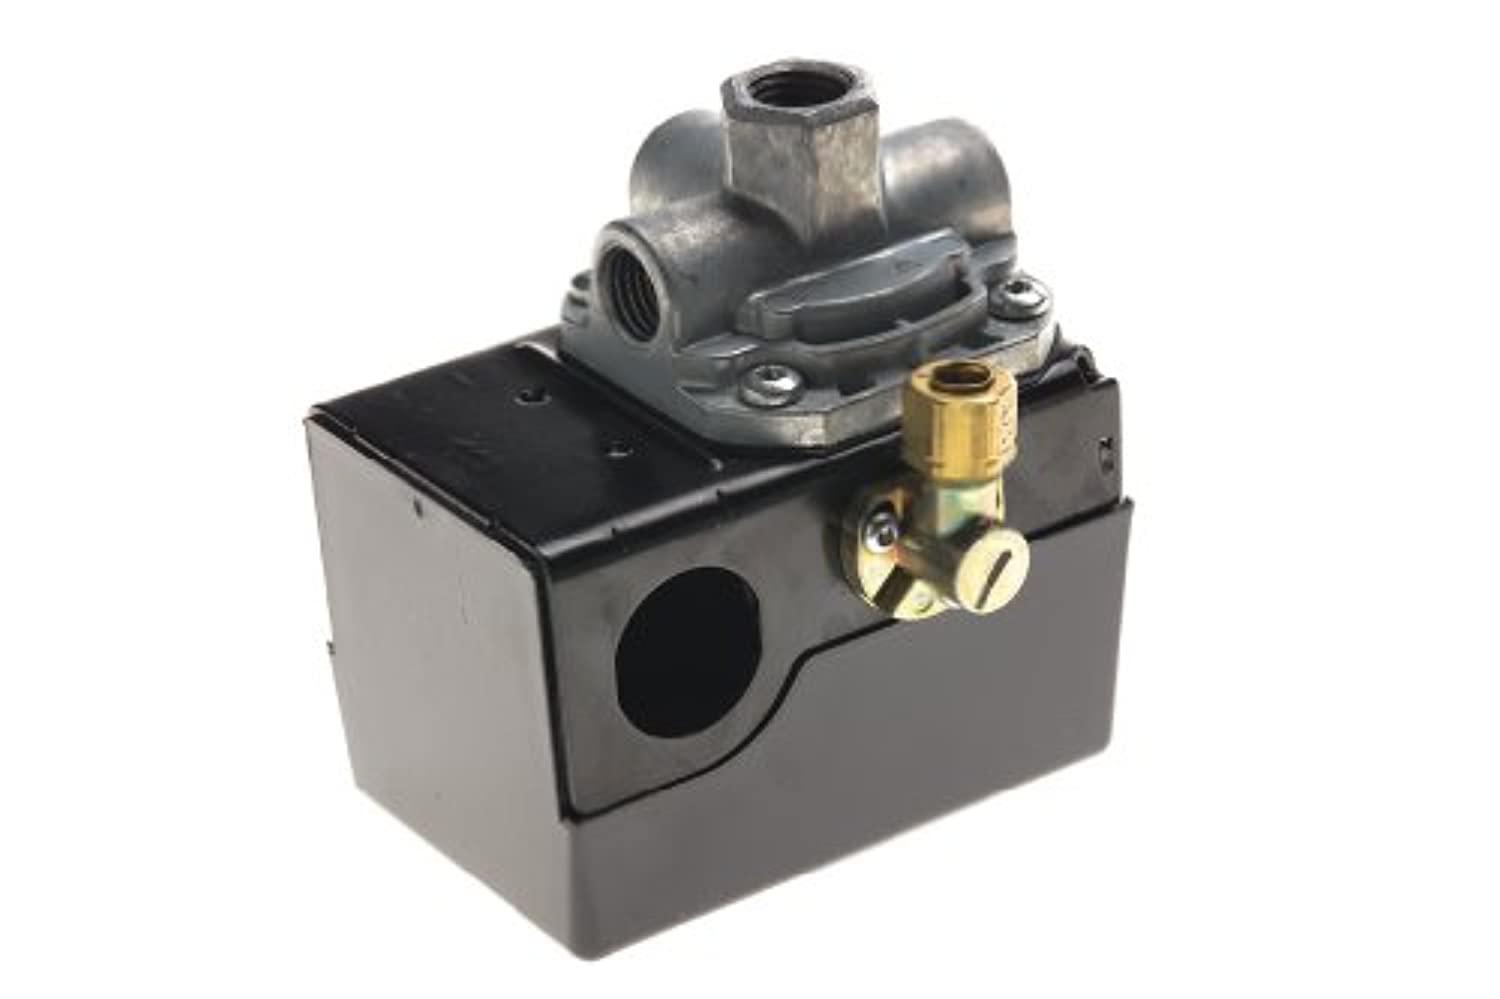 devilbiss z-d23361 pressure switch for air compressor